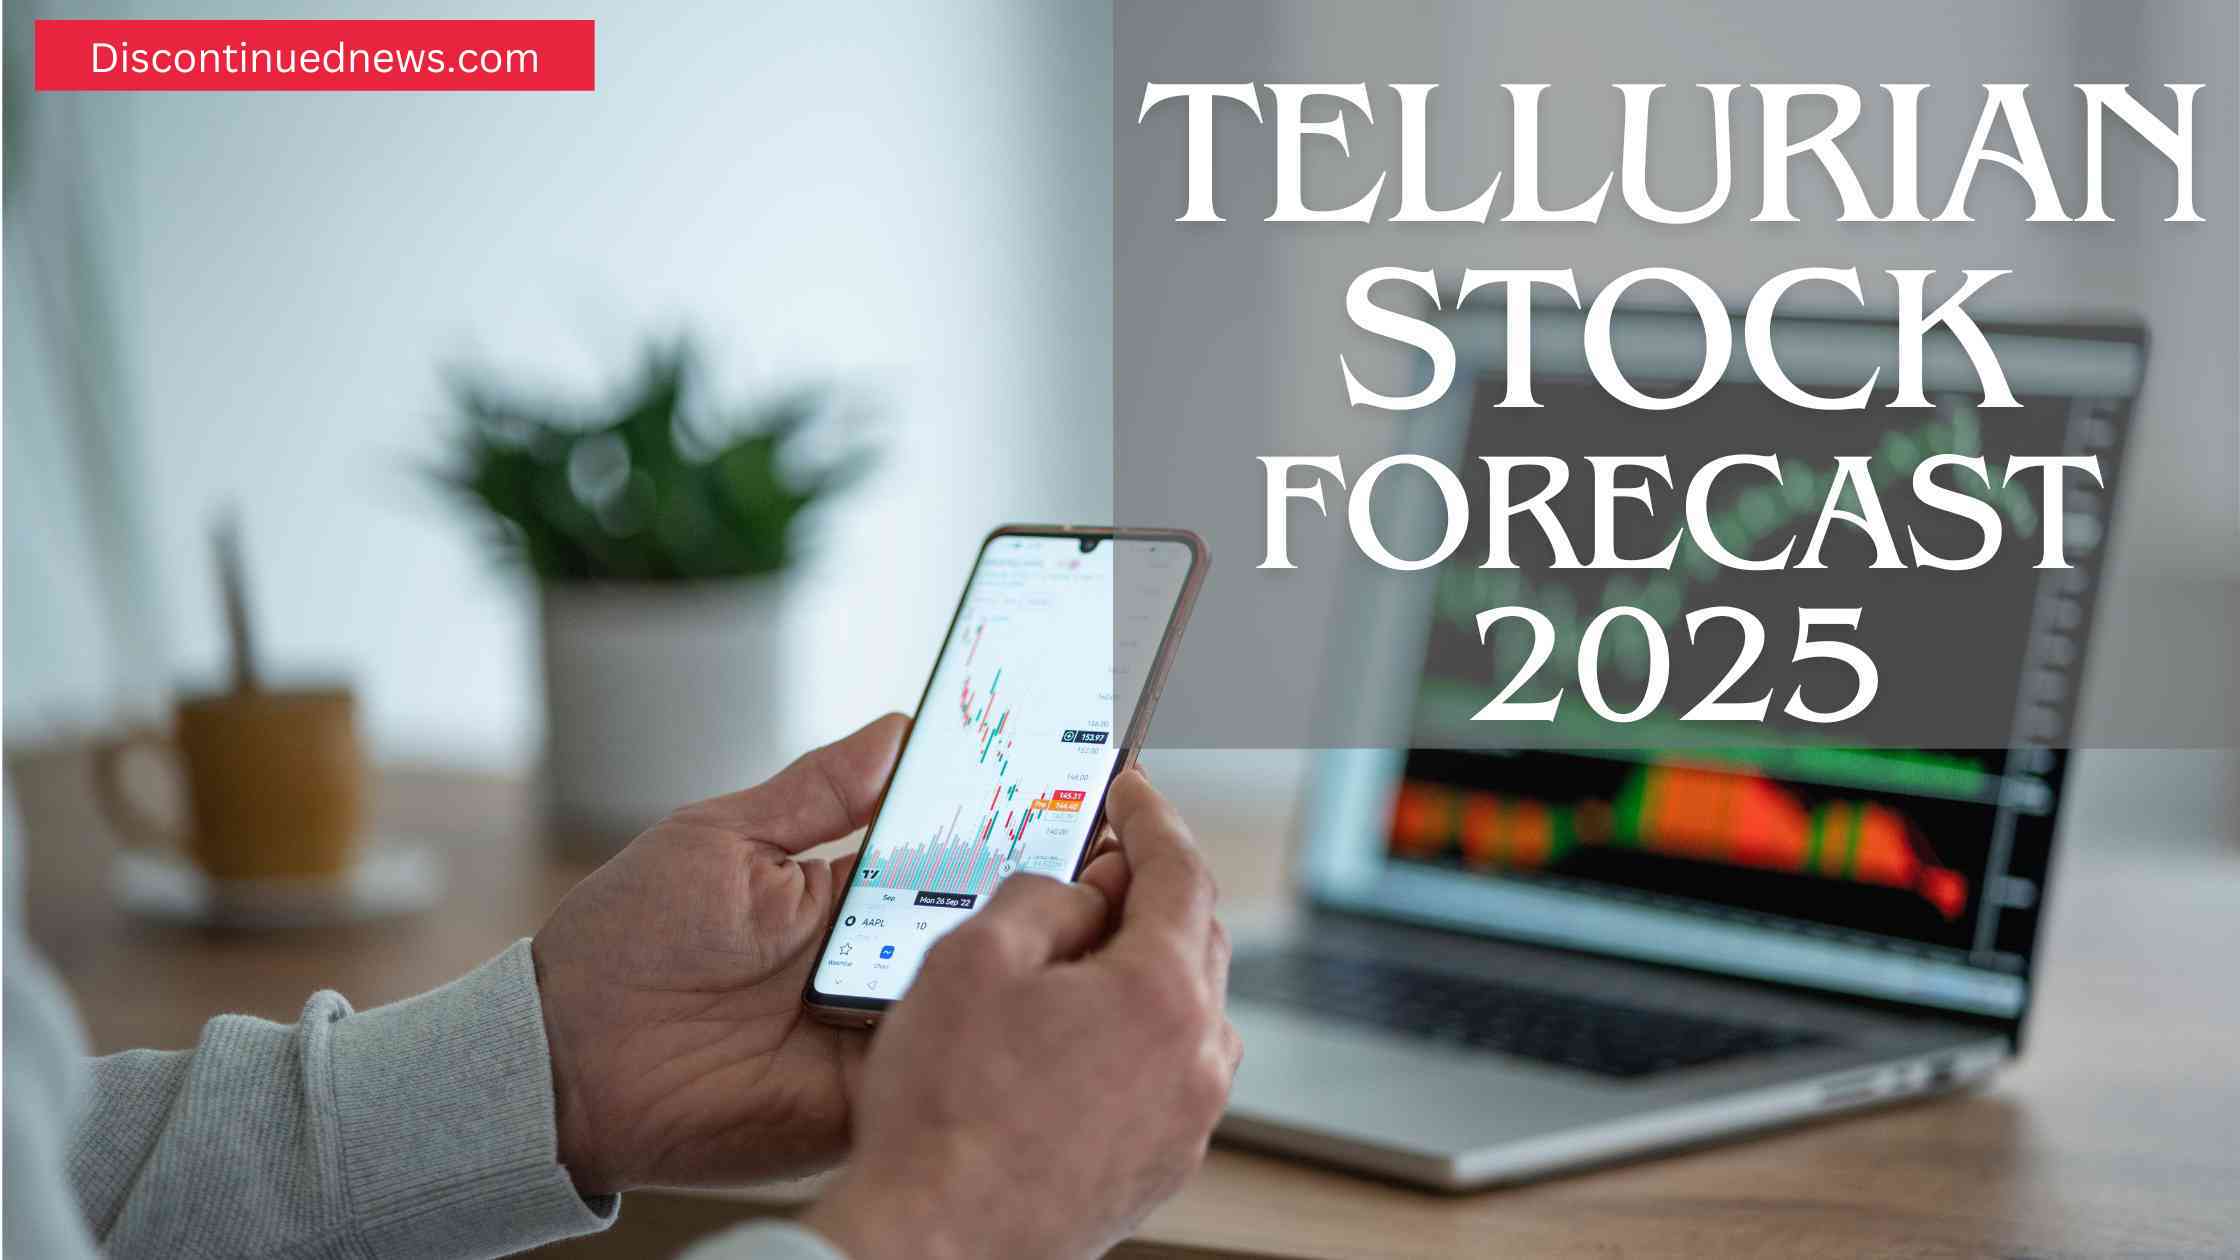 Tellurian Stock Forecast 2025